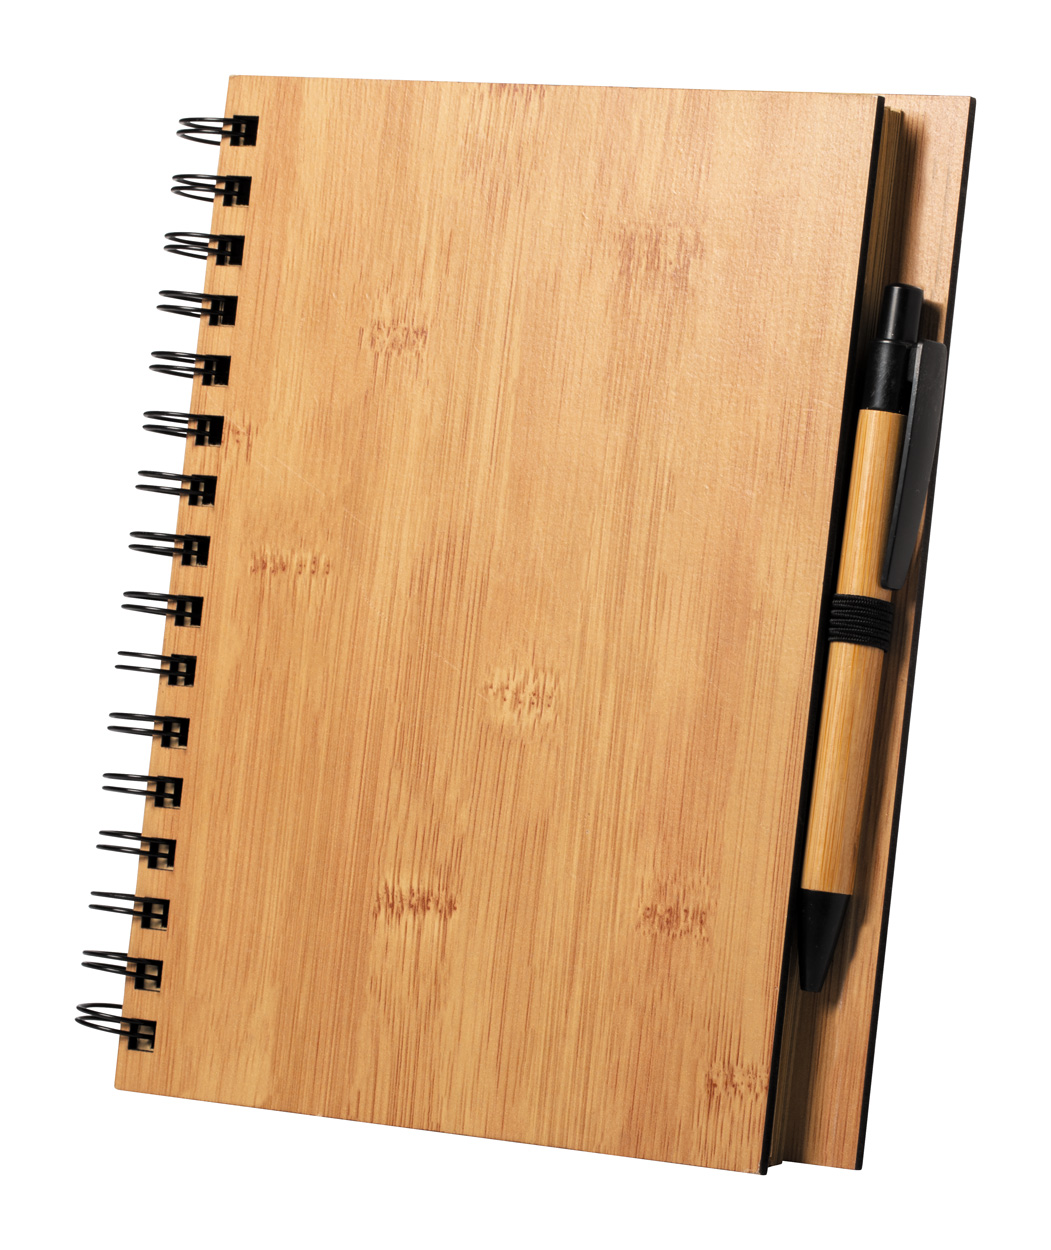 Polnar notebook